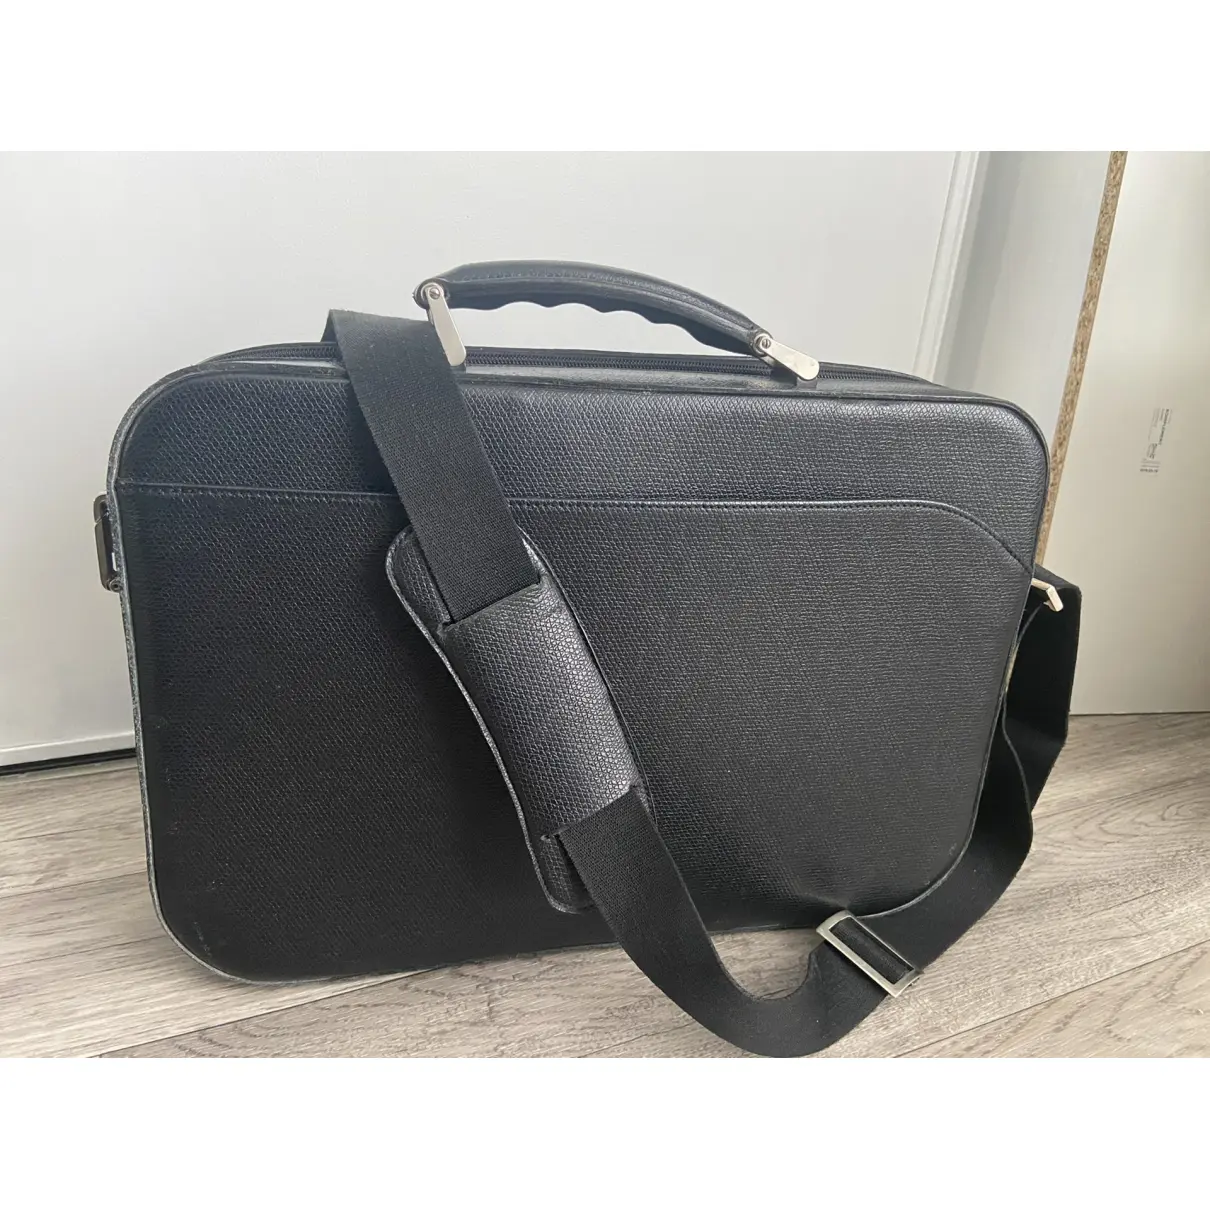 Buy Lancel Leather satchel online